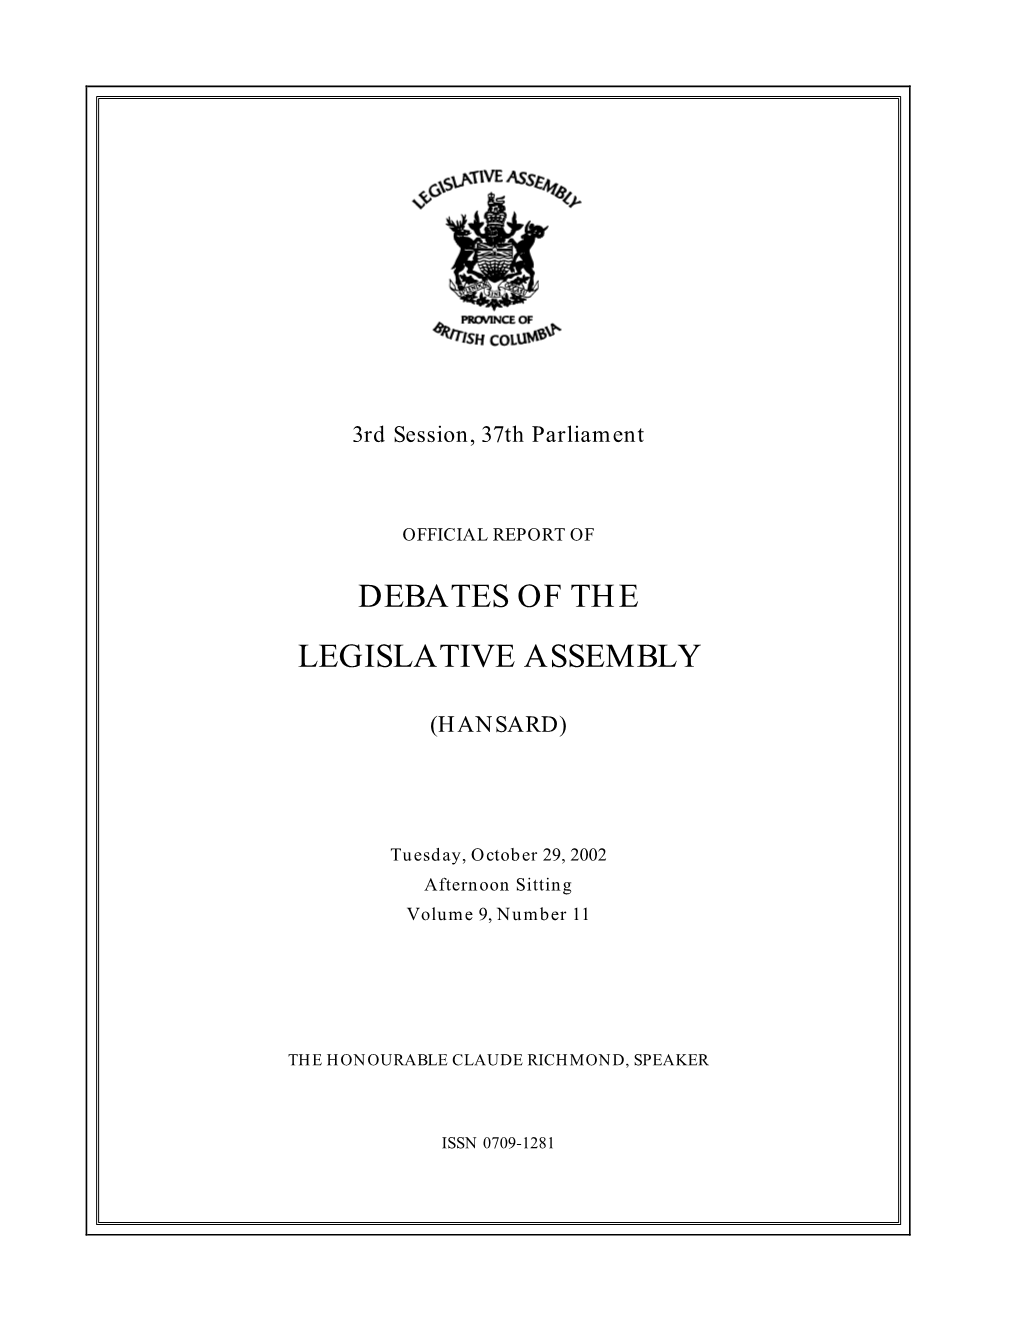 Hansard — Tuesday, October 29, 2002, P.M. — Vol. 9, No. 11 (PDF)